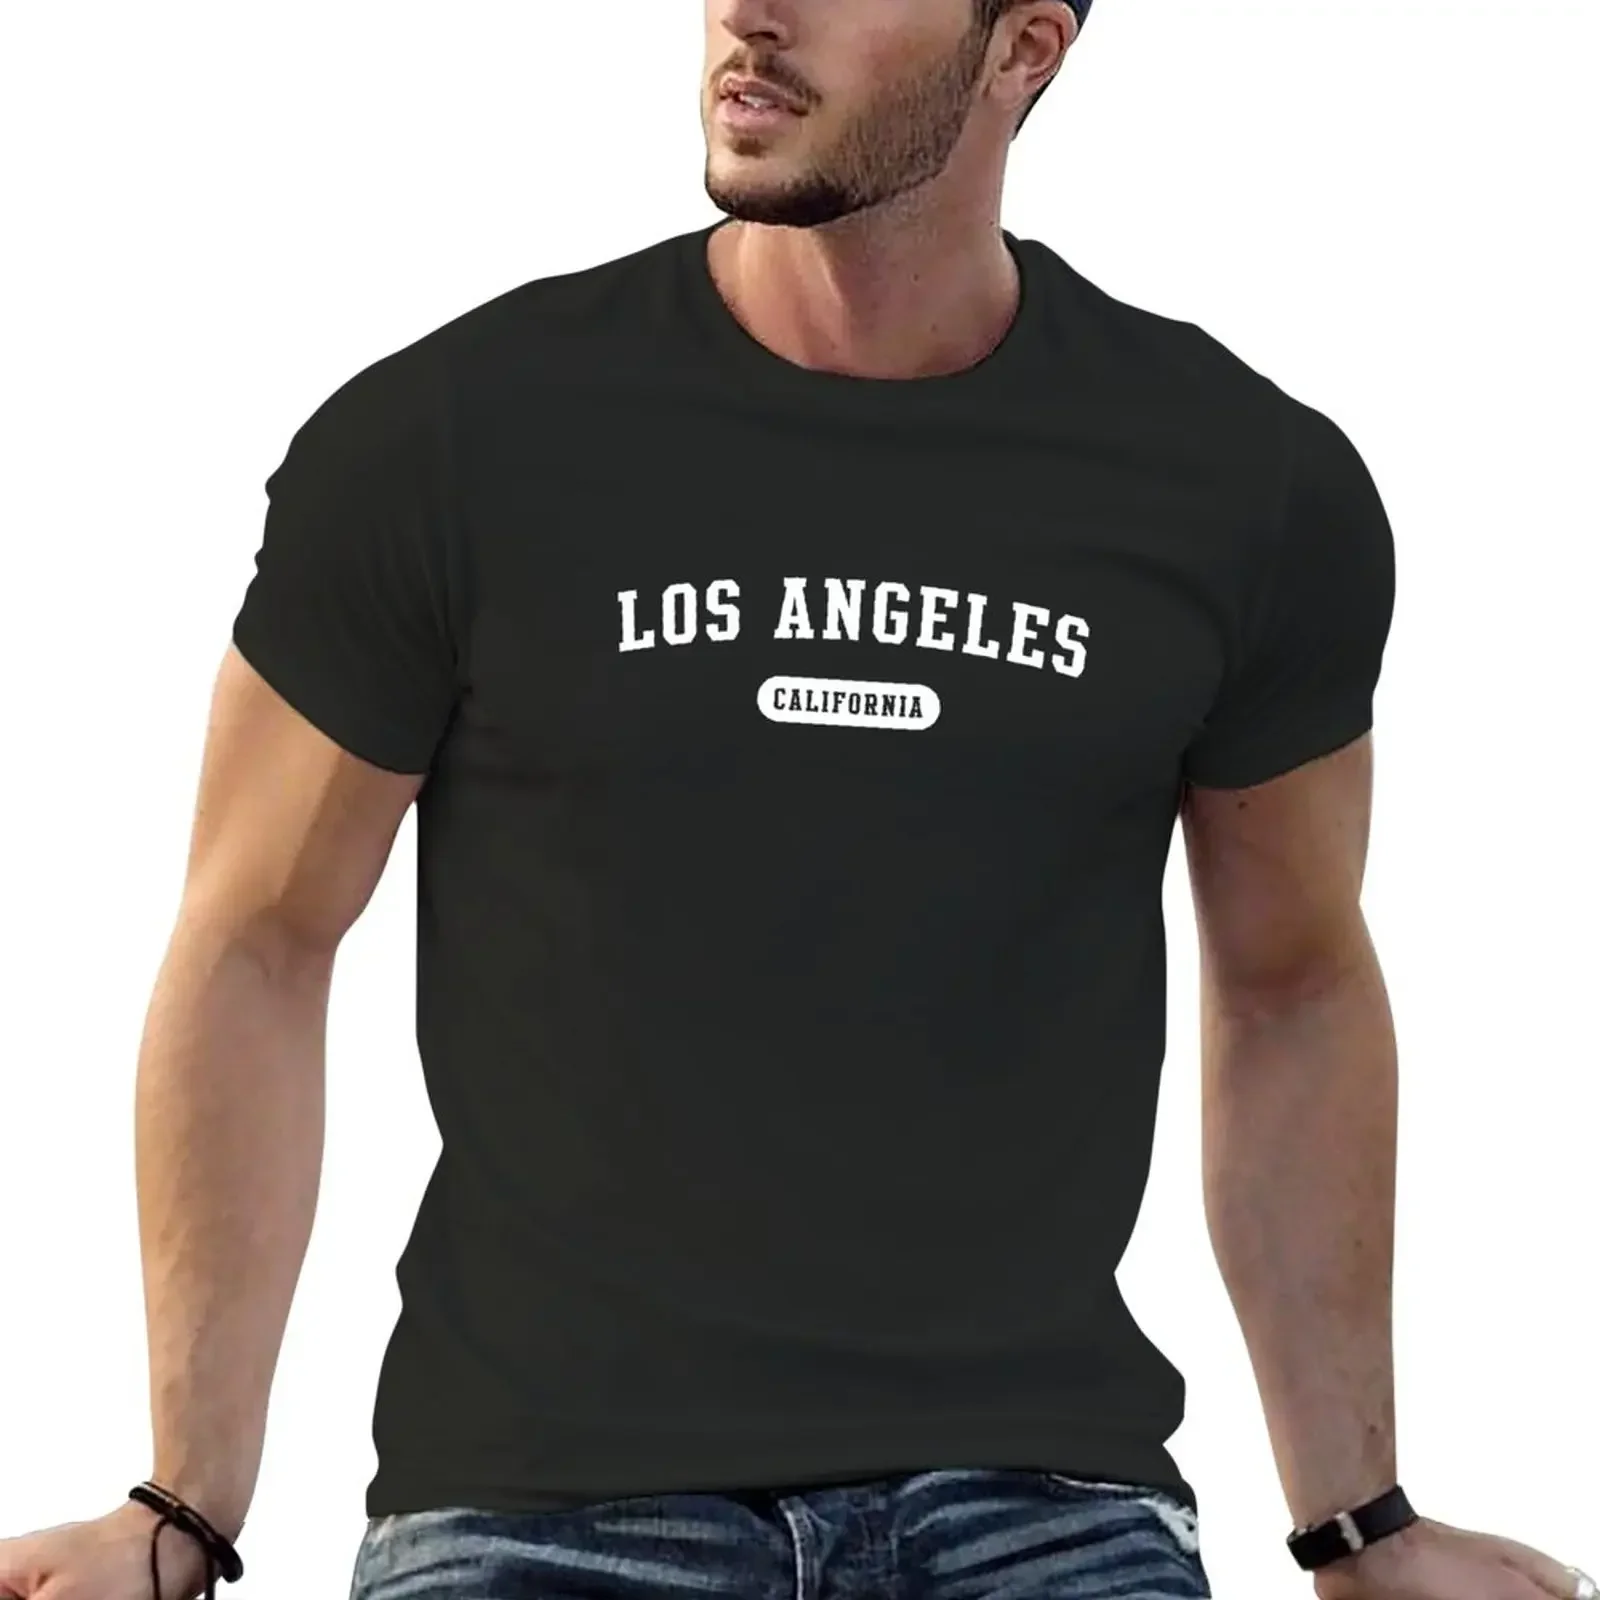 

Los Angeles, California T-Shirt customizeds new edition Men's cotton t-shirt